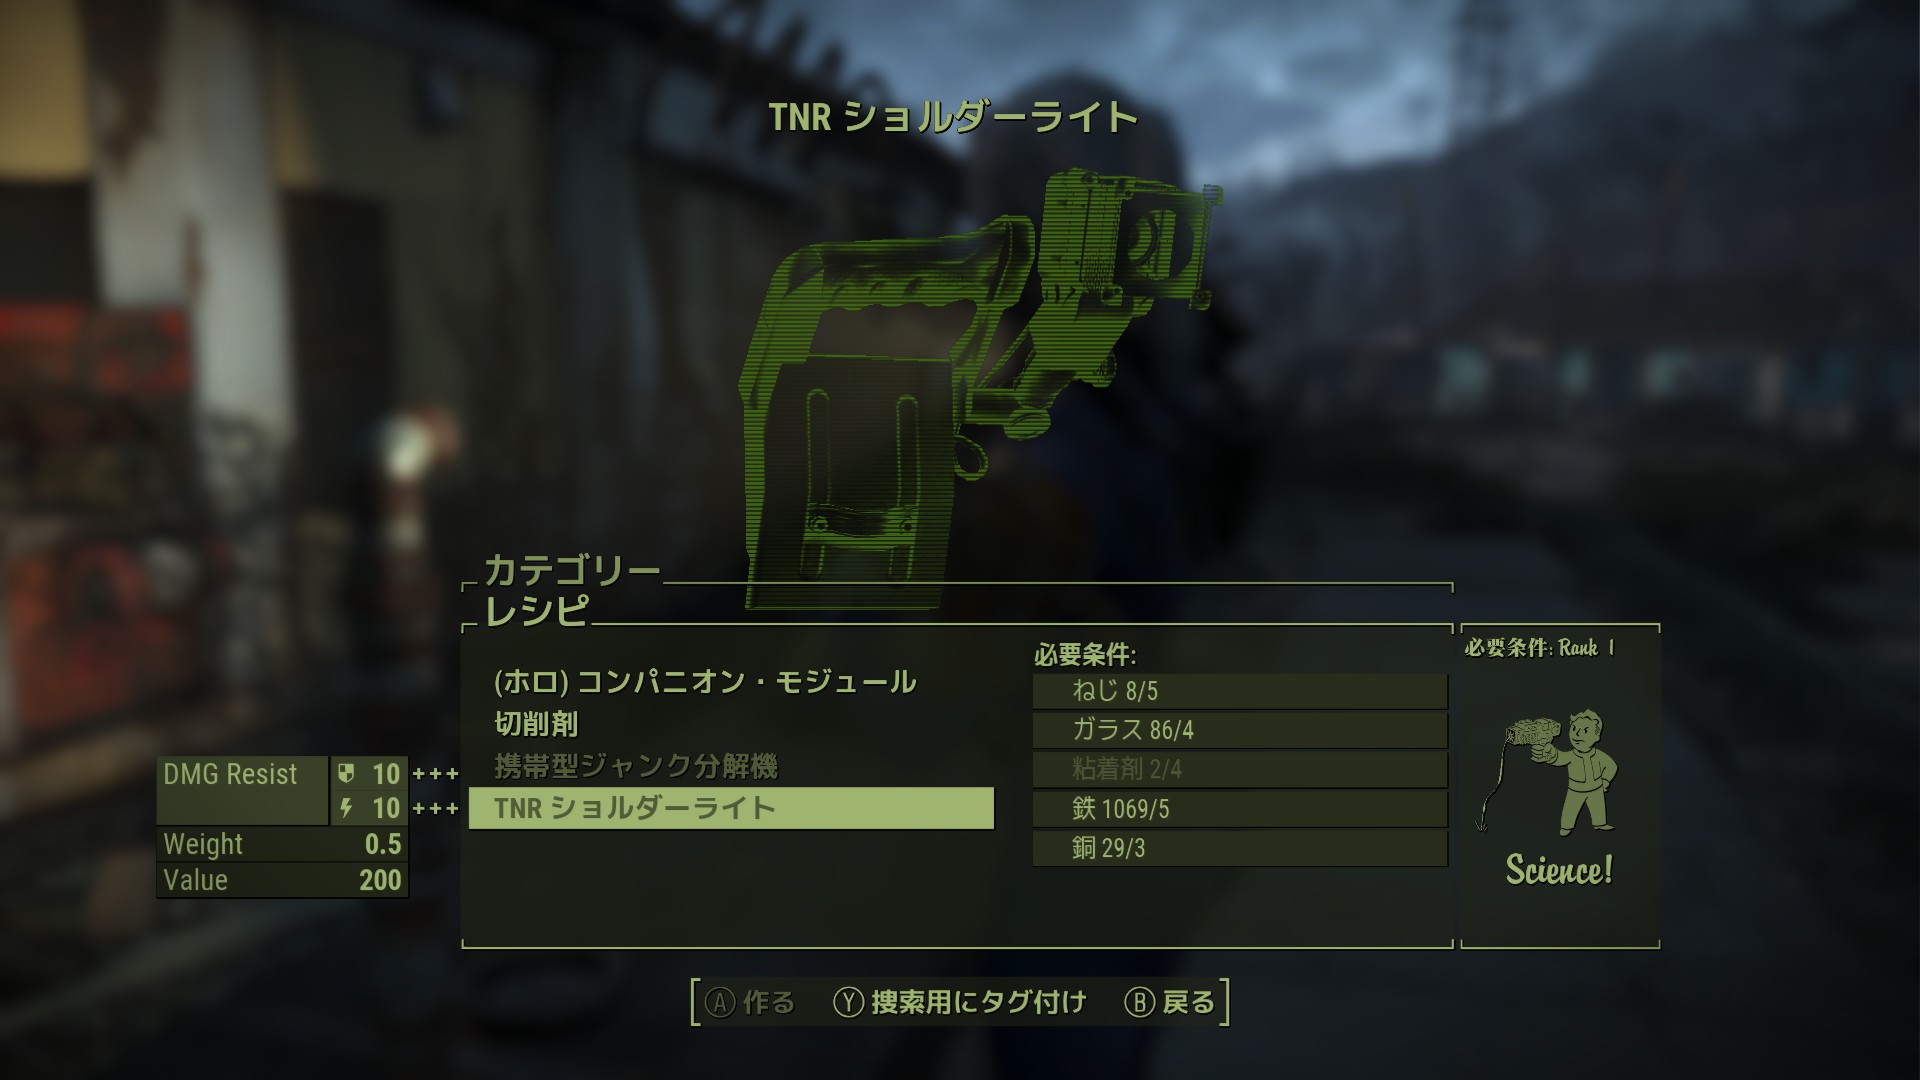 Tnr Shoulder Lamp 日本語化対応 服 Fallout4 Mod データベース Mod紹介 まとめサイト